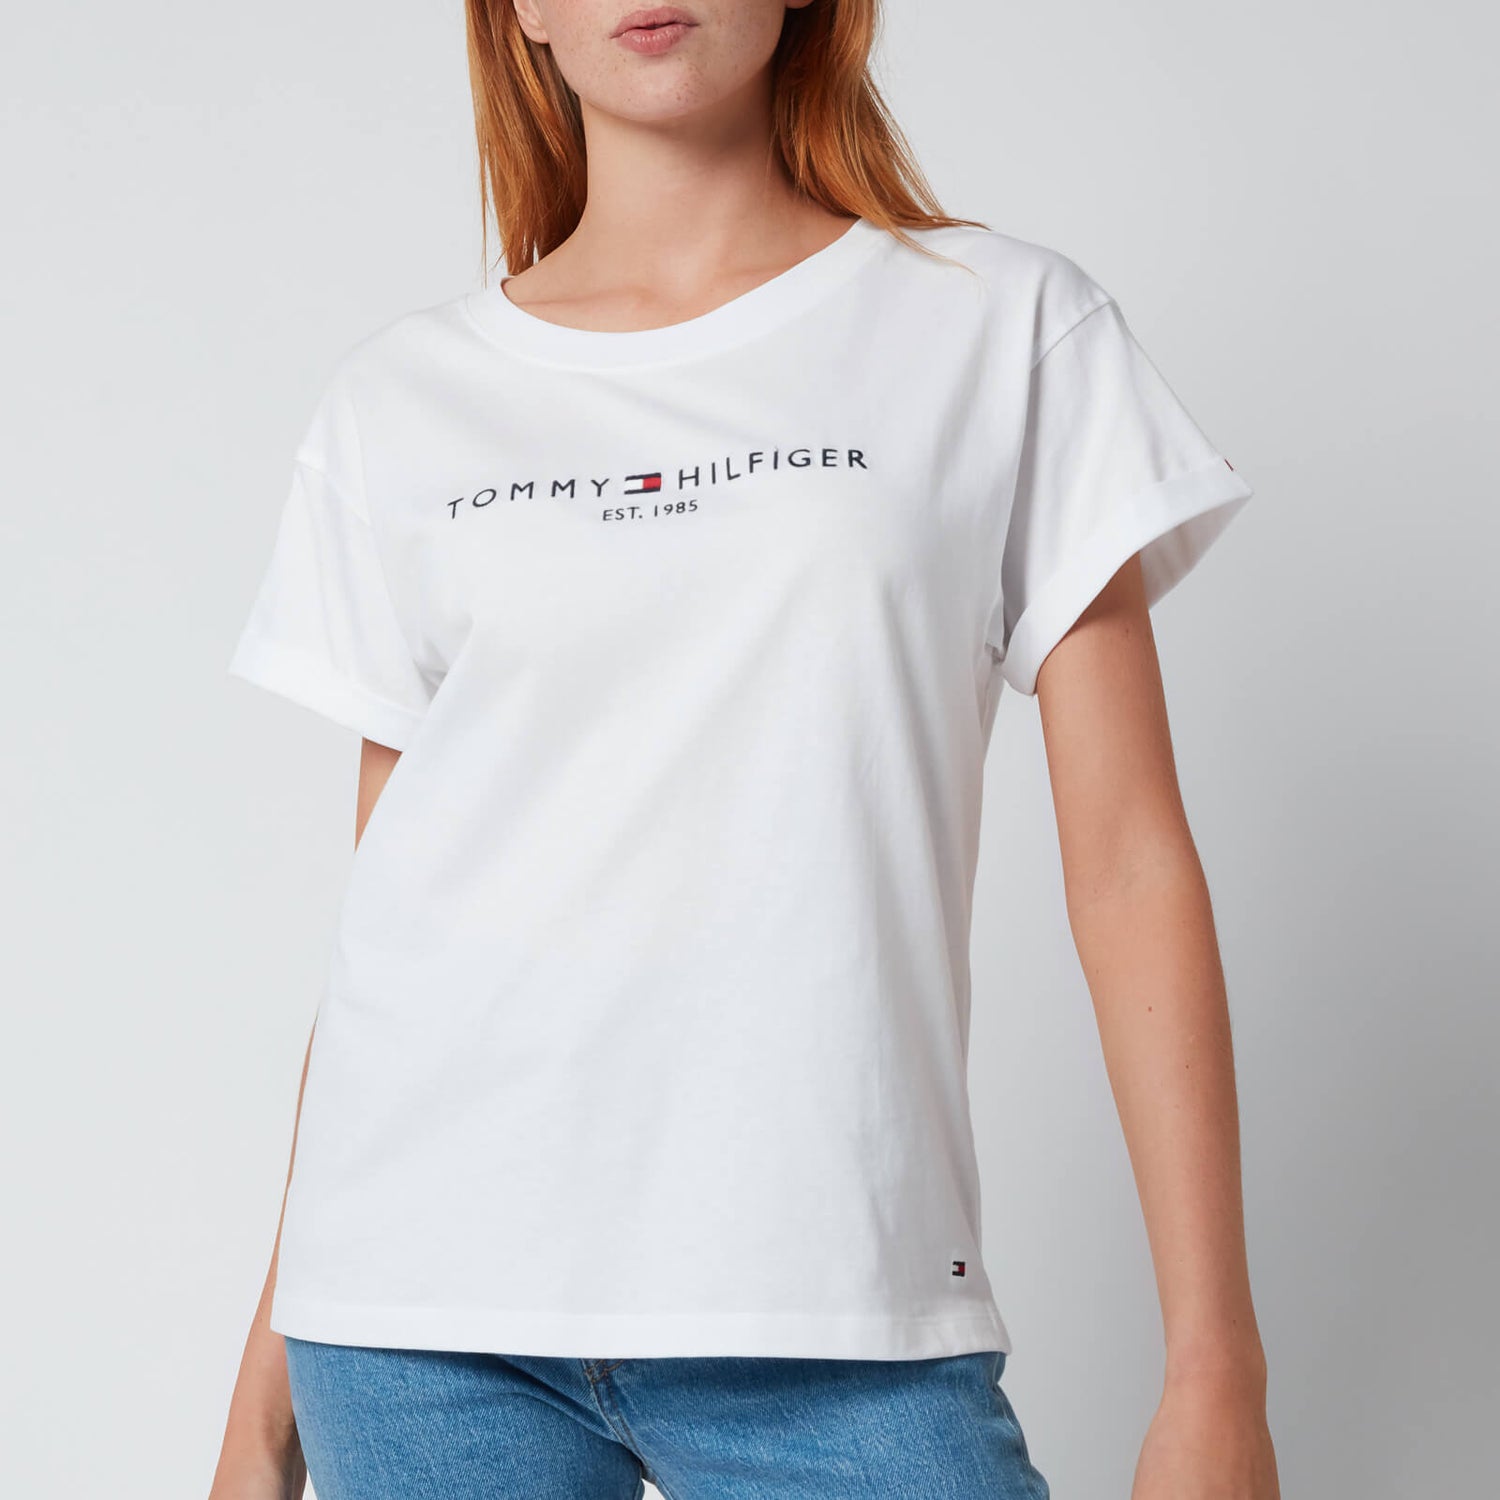 Tommy Hilfiger Women's Relaxed Hilfiger Crewneck T-Shirt - White